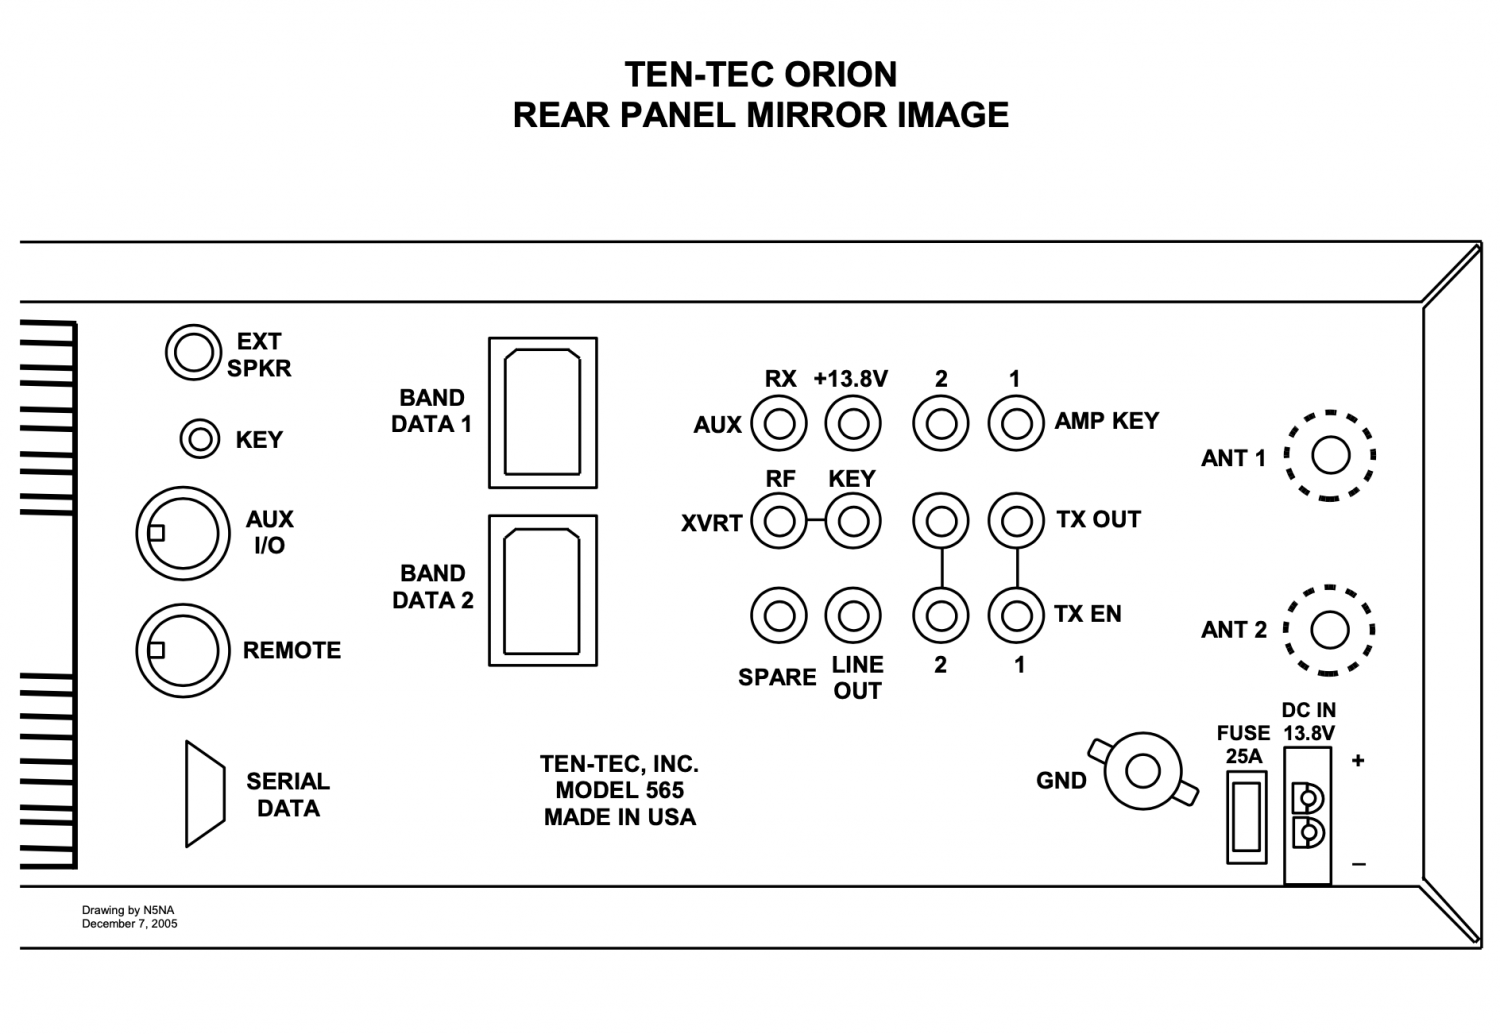 Ten-Tec - Orion I Model 565 - HF Transceiver - Rear Panel Mirror Image